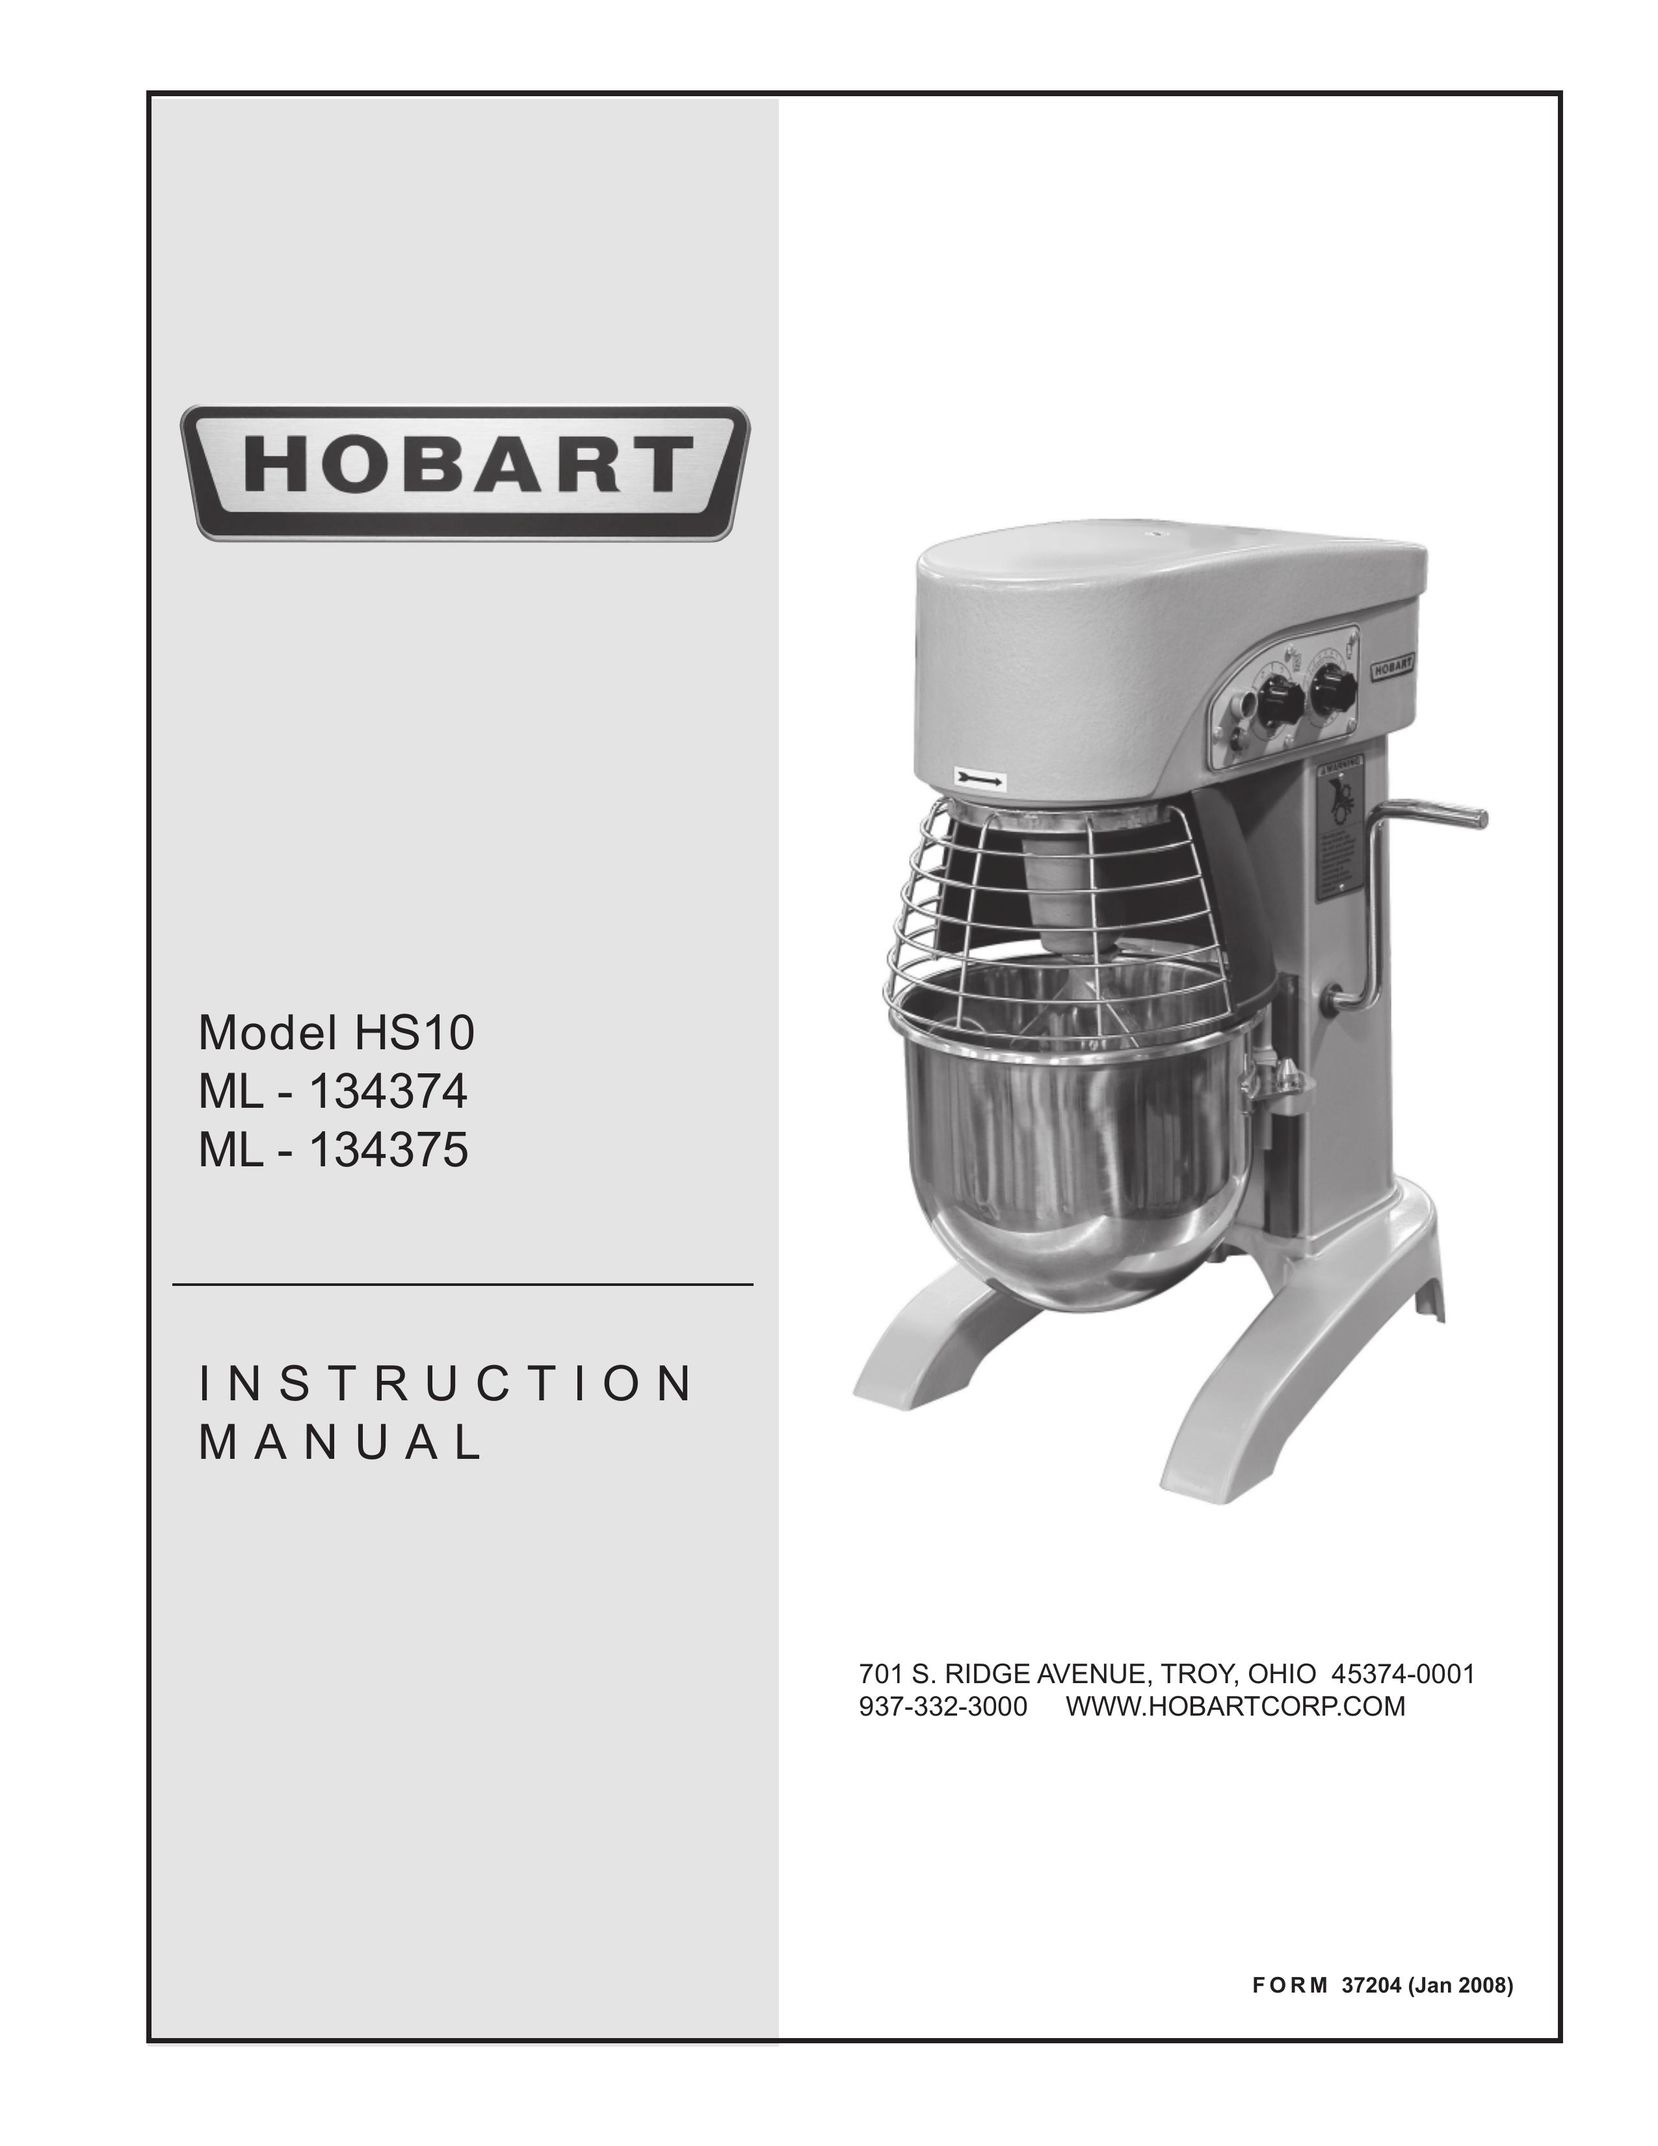 Hobart ML - 134375 Mixer User Manual